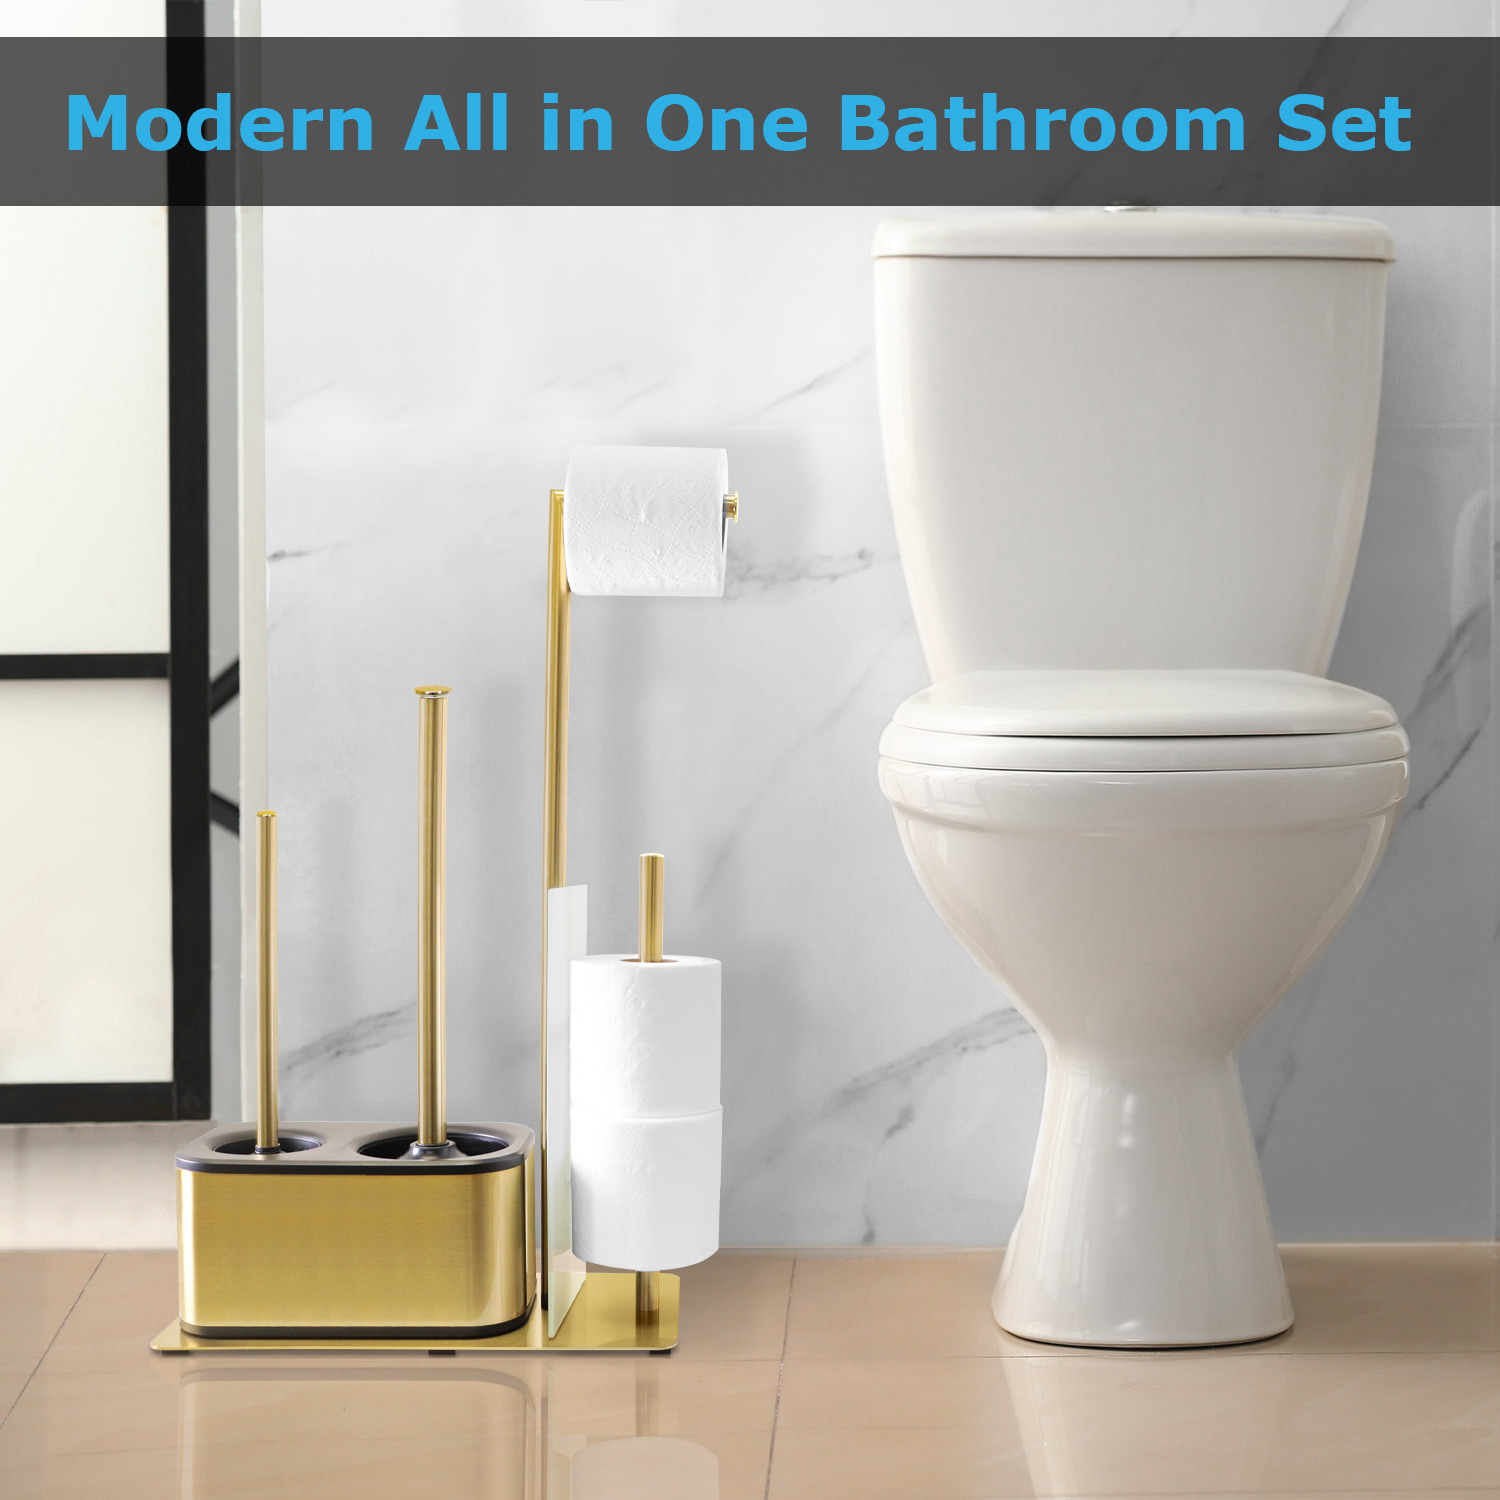 All in one toilet brush, plunger toilet paper holder Bath Set Gold